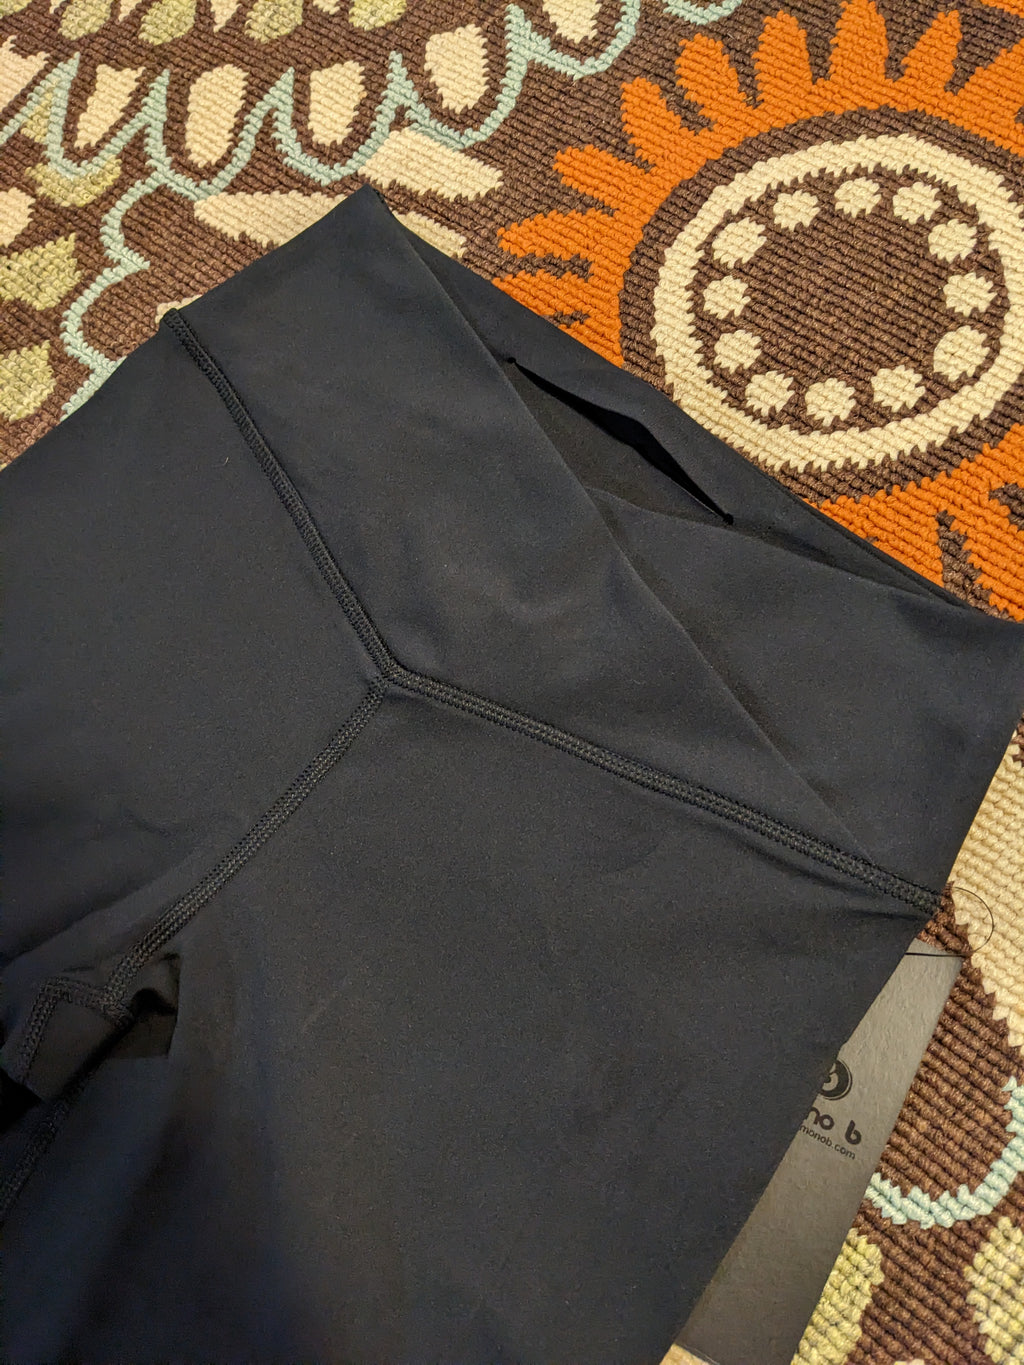 Venice Crossover Waist Biker Shorts (S-M-L) - IronFox Clothing